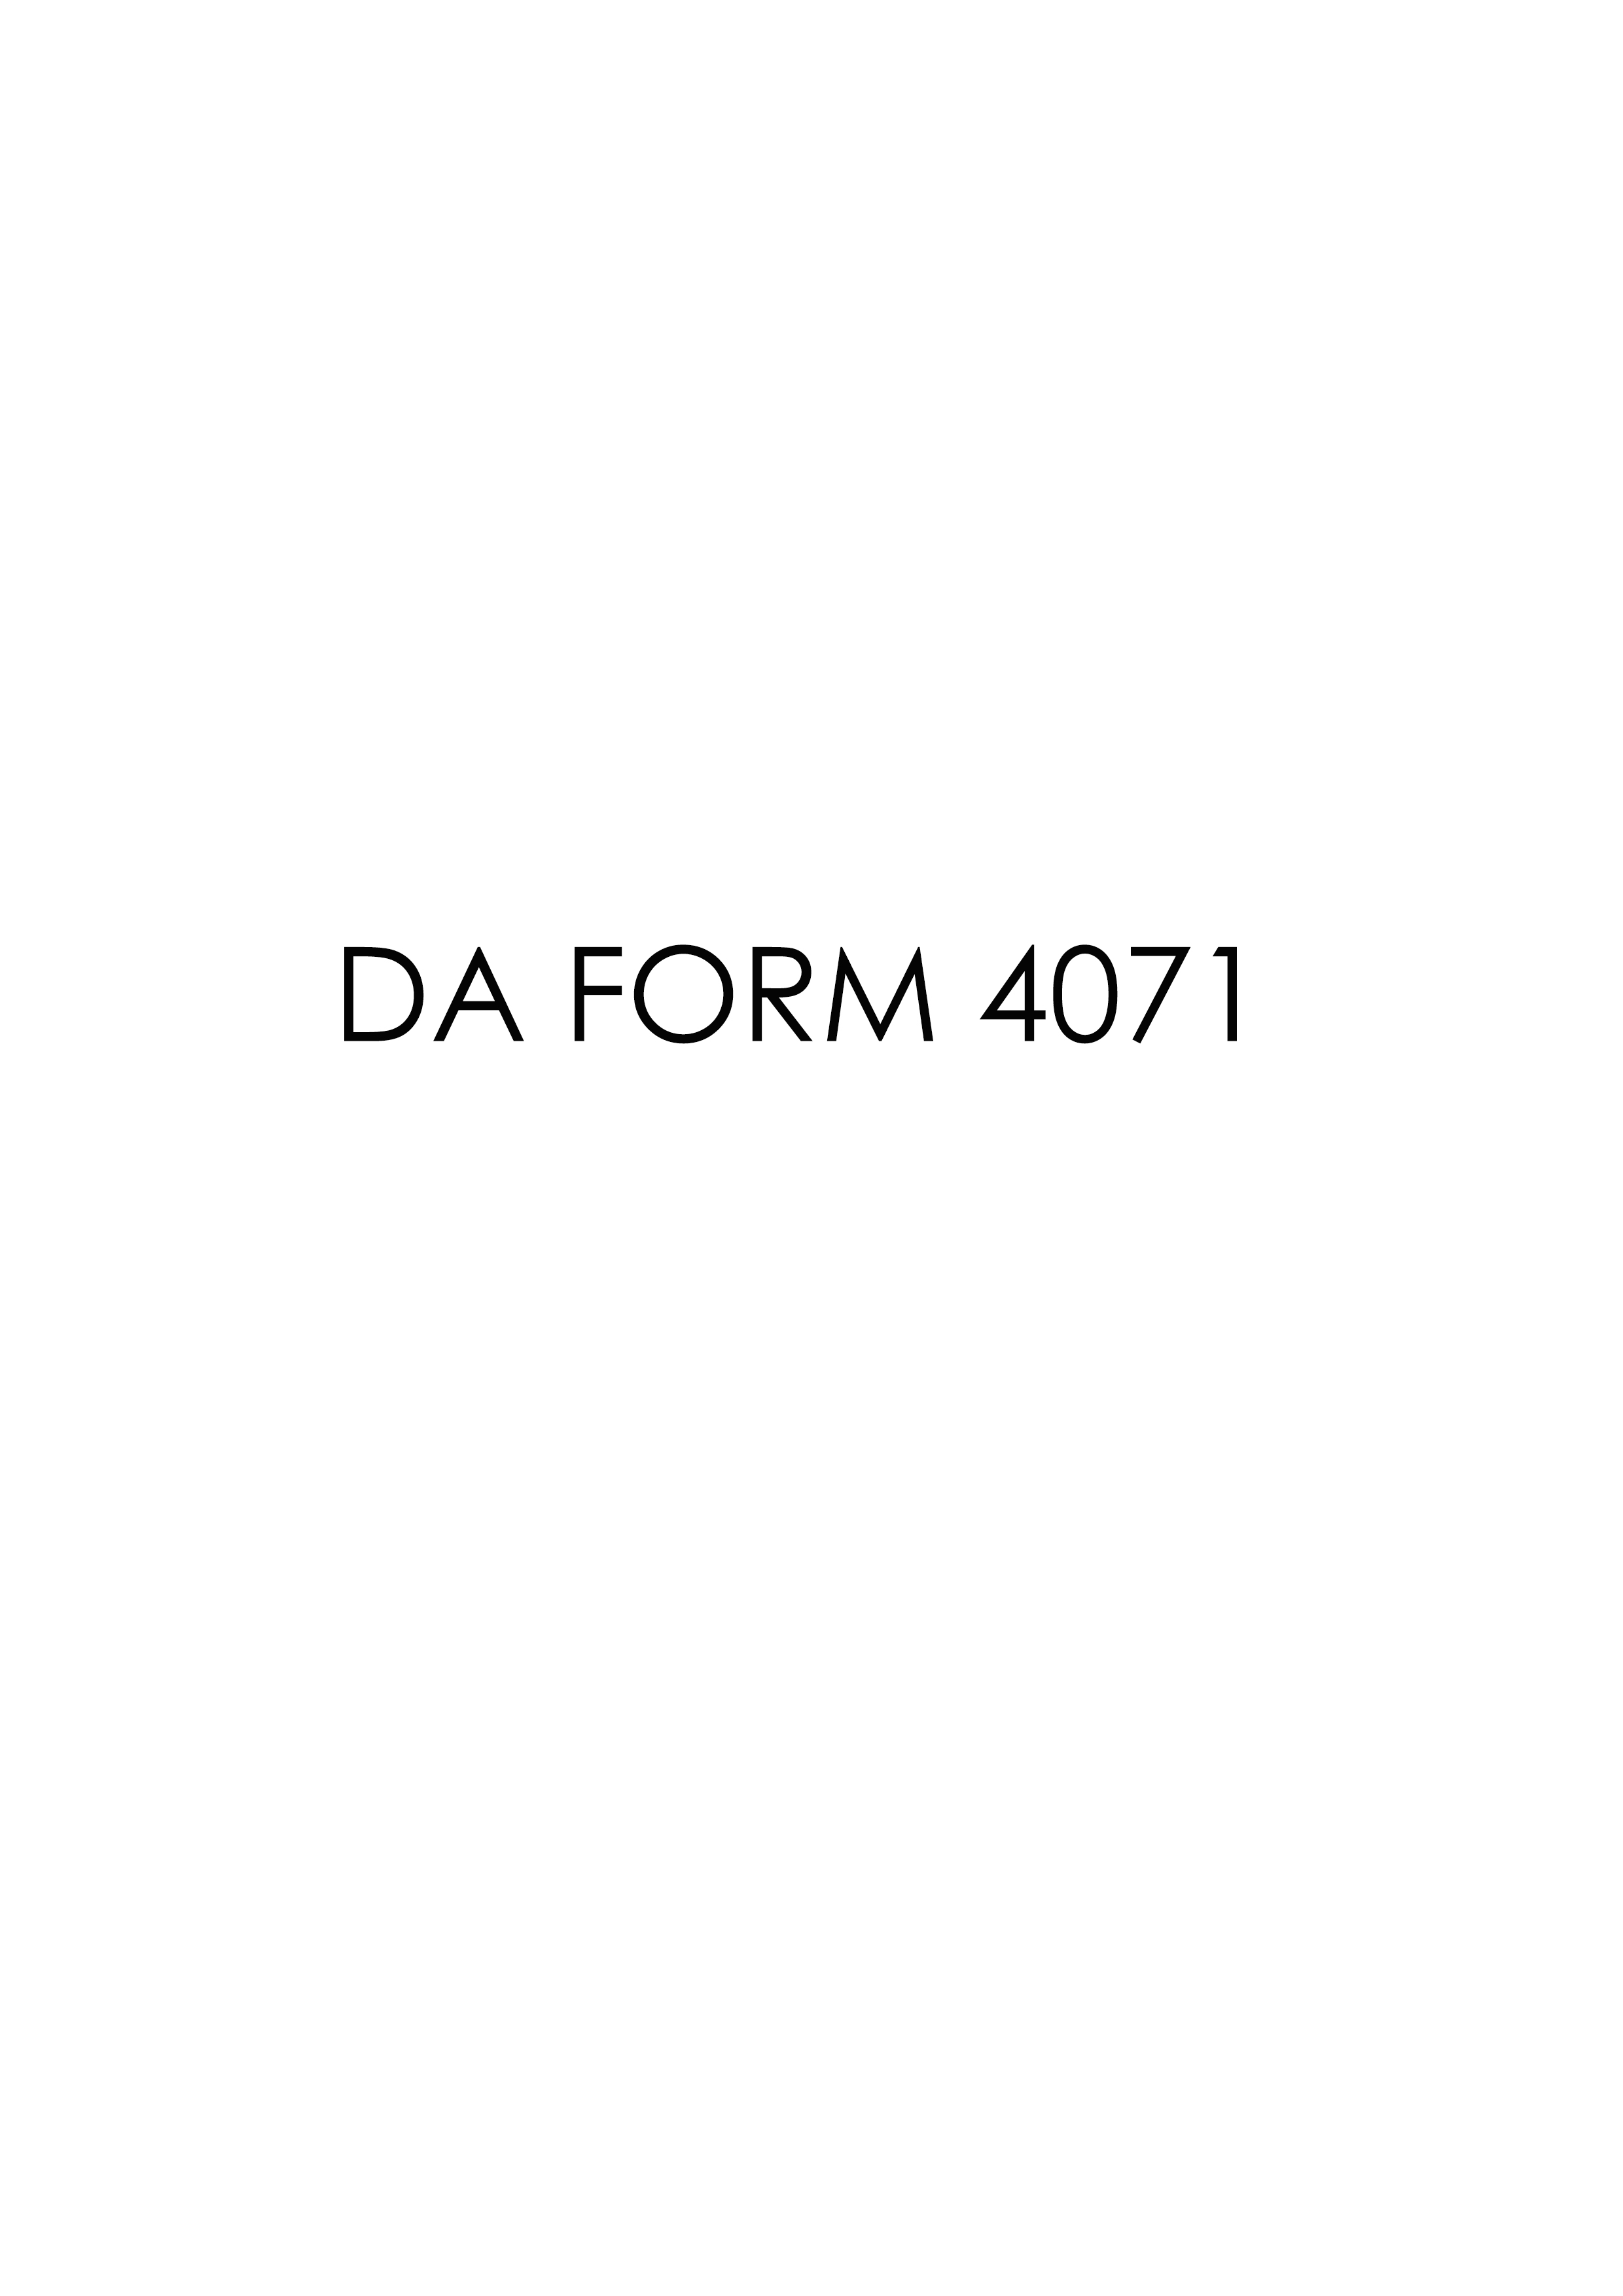 da Form 4071 fillable